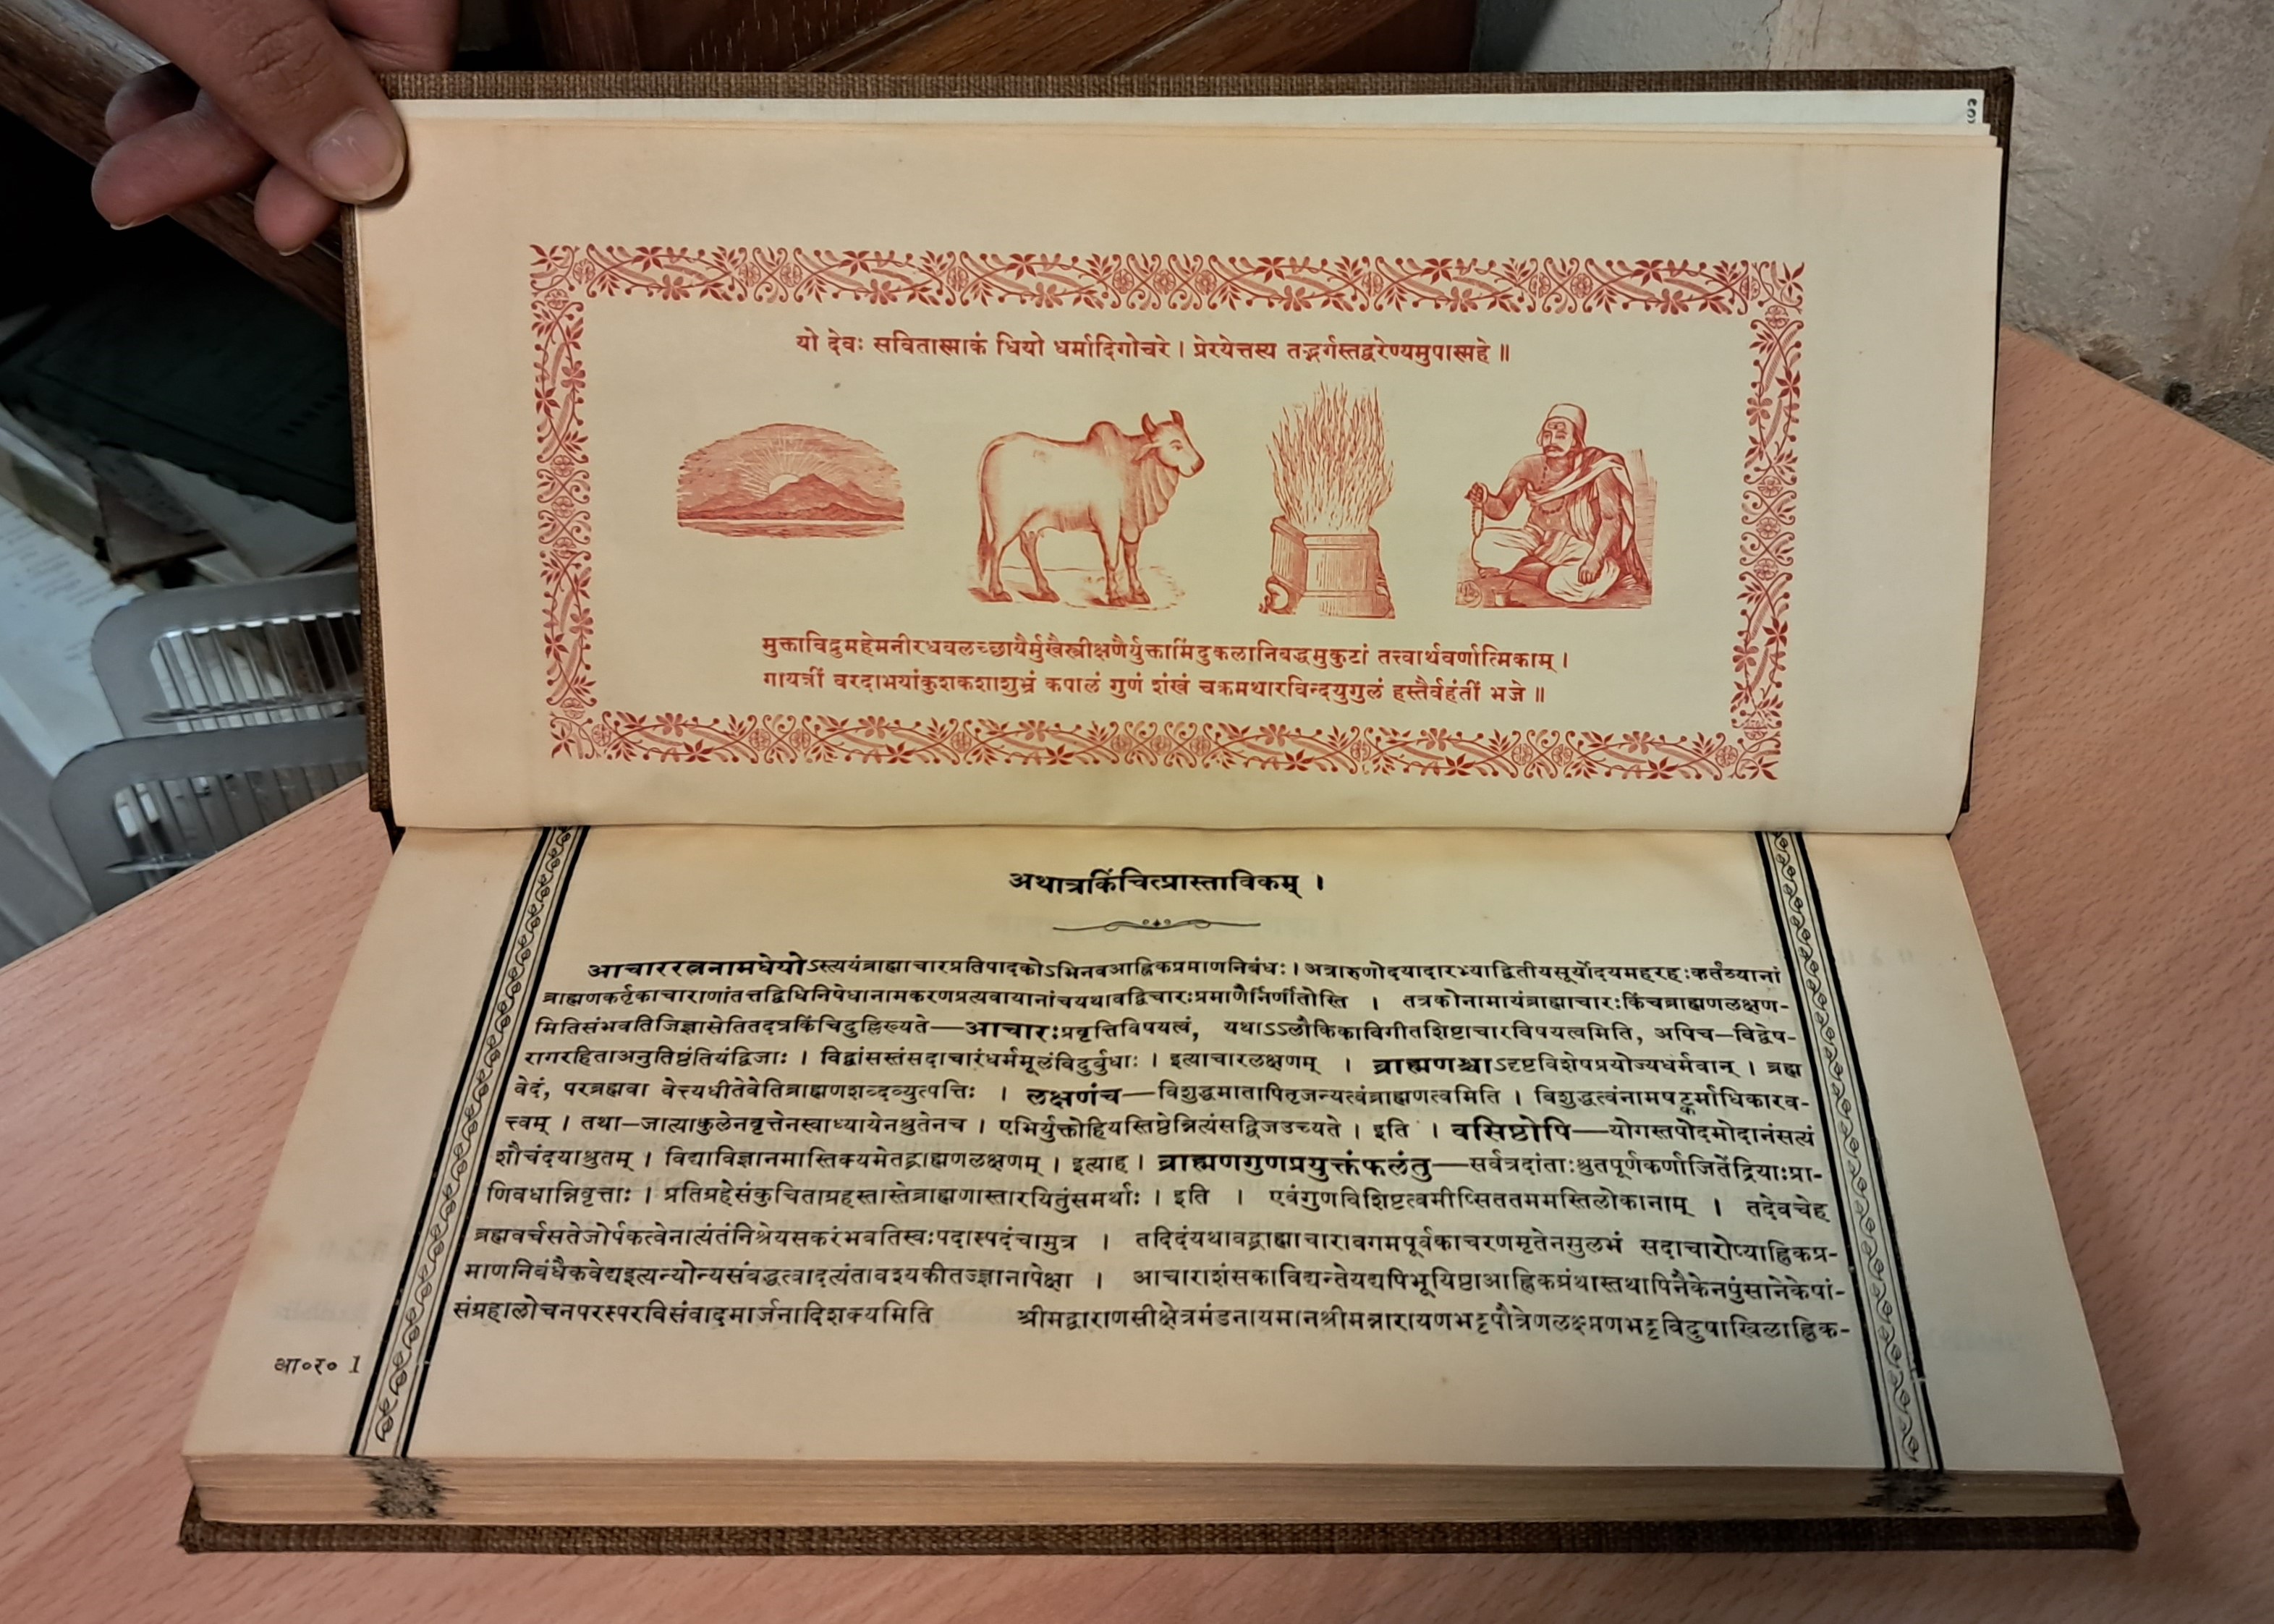 A Sanskrit book